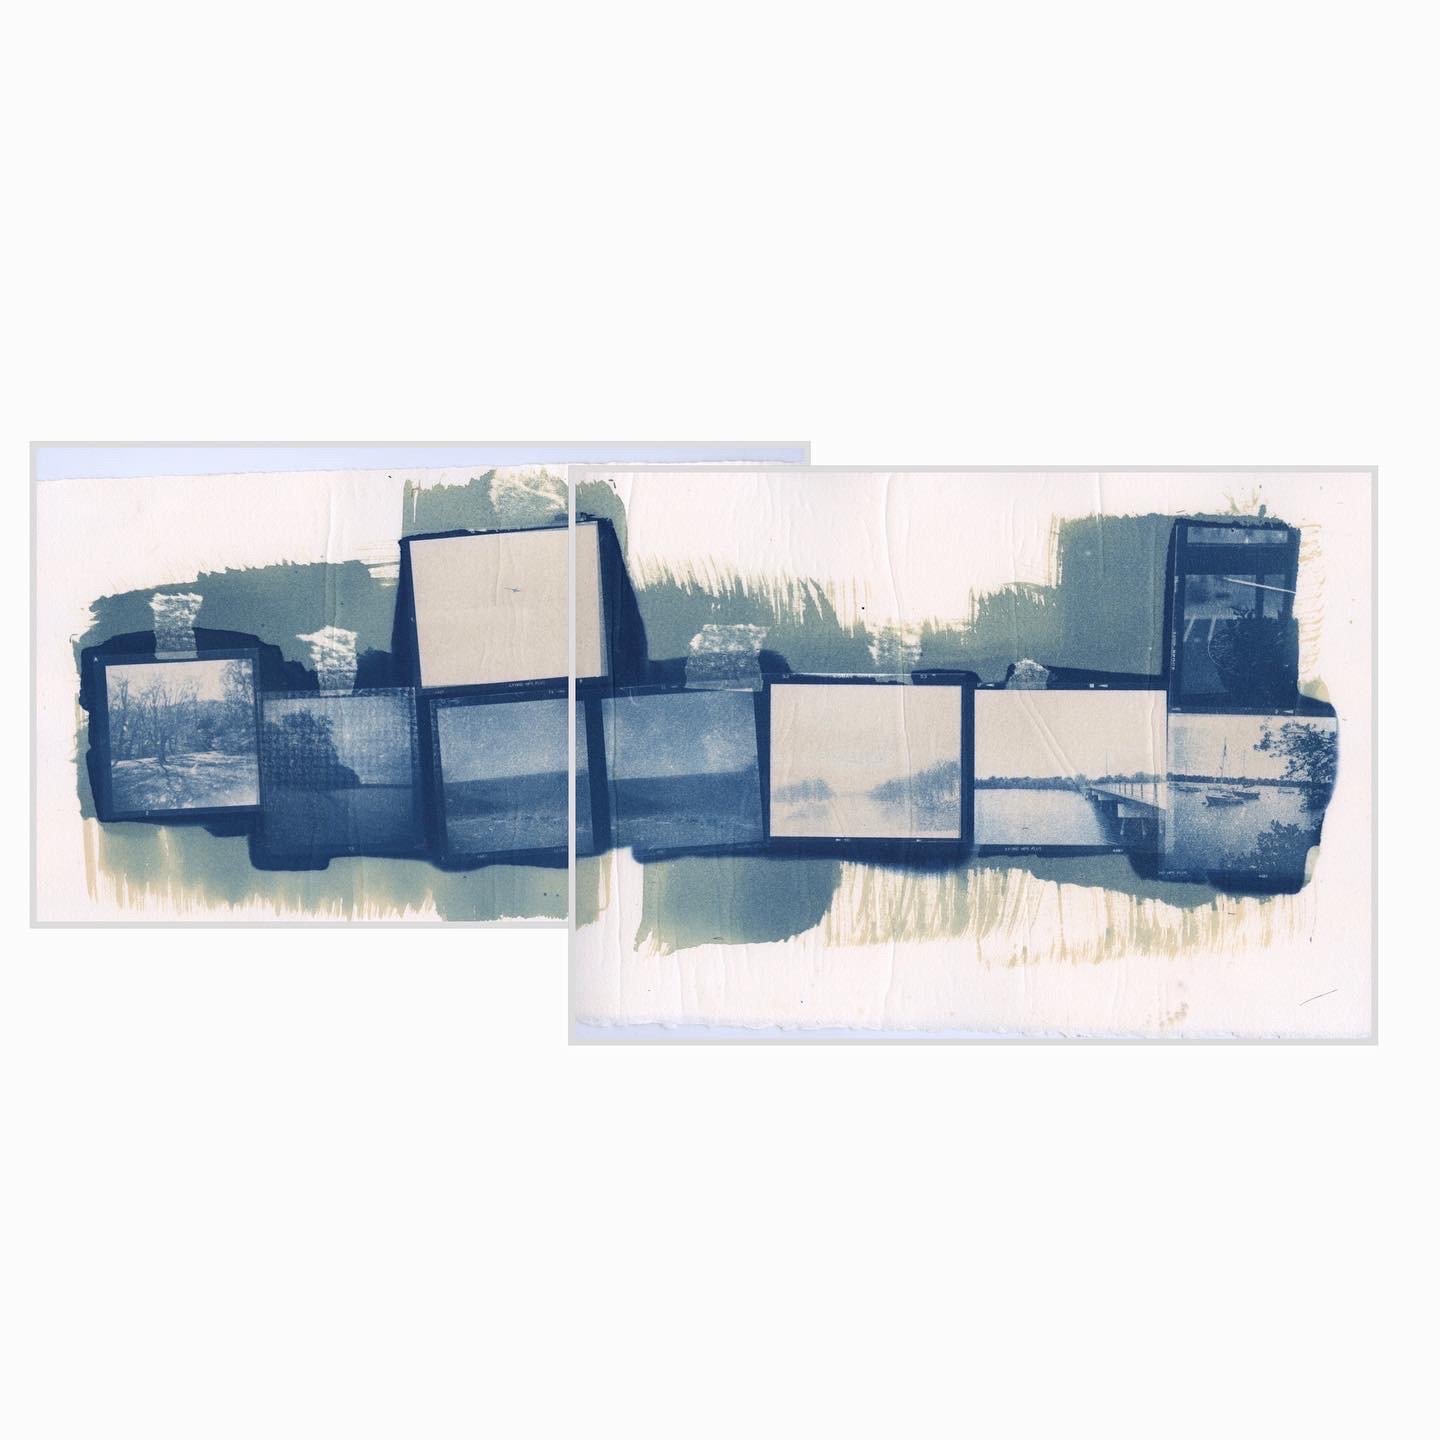  120 film cyanotype contact print collage. 